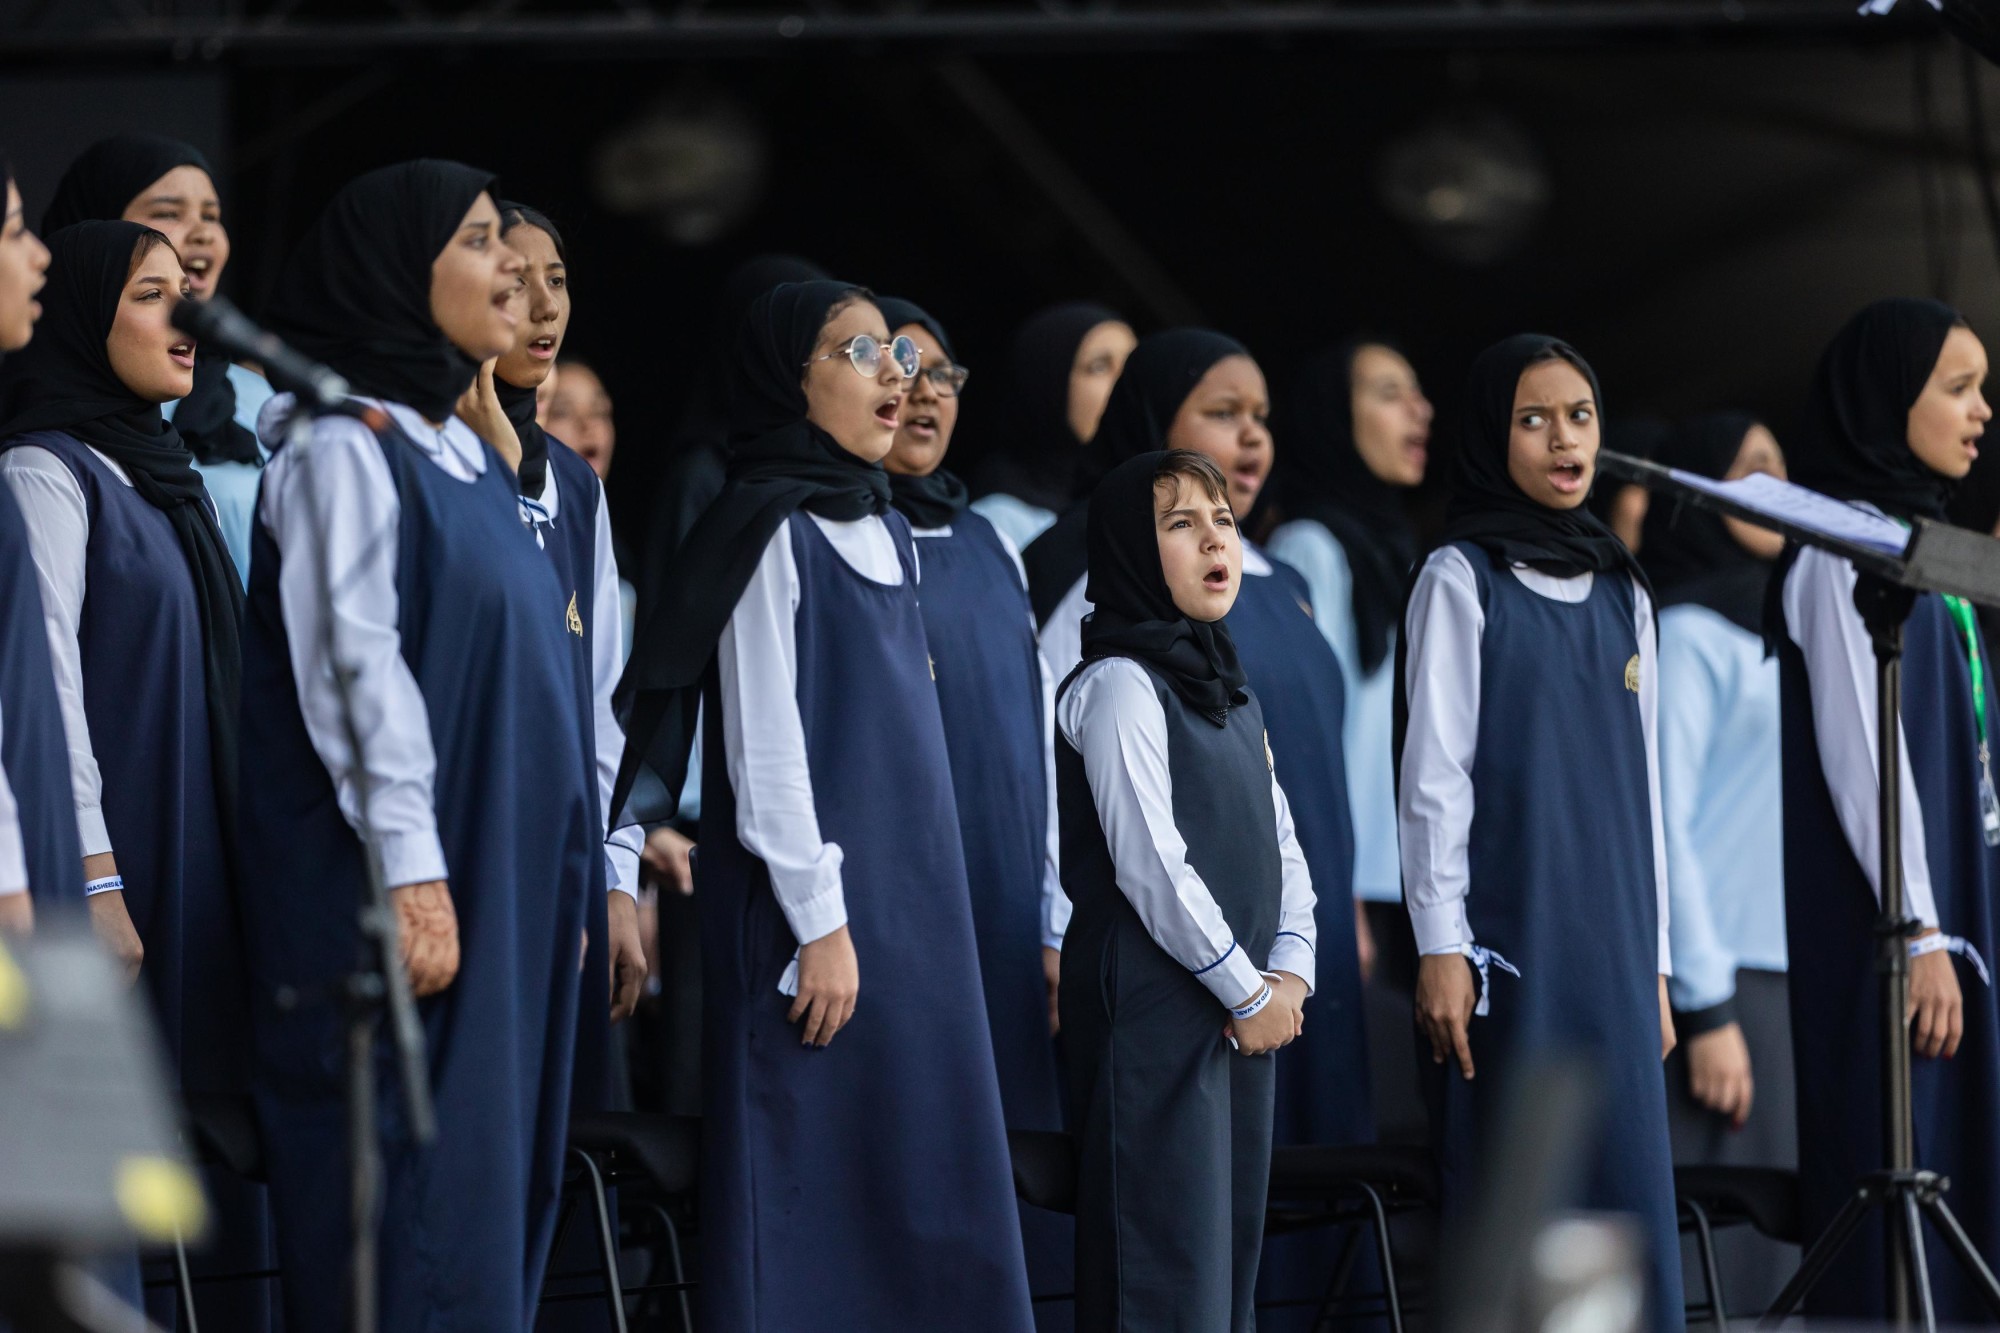 School choirs perform ‘Nasheed Al Wasl’ at Jubilee Stage m66556